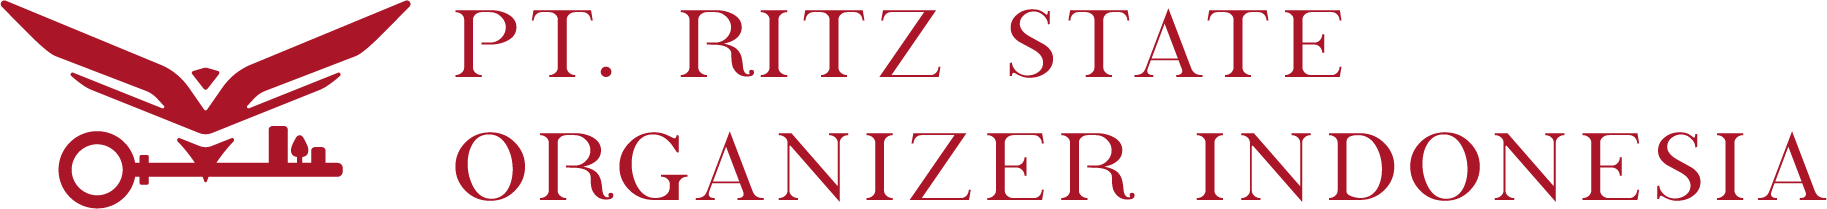 PT.Ritz state Organizer Indonesia